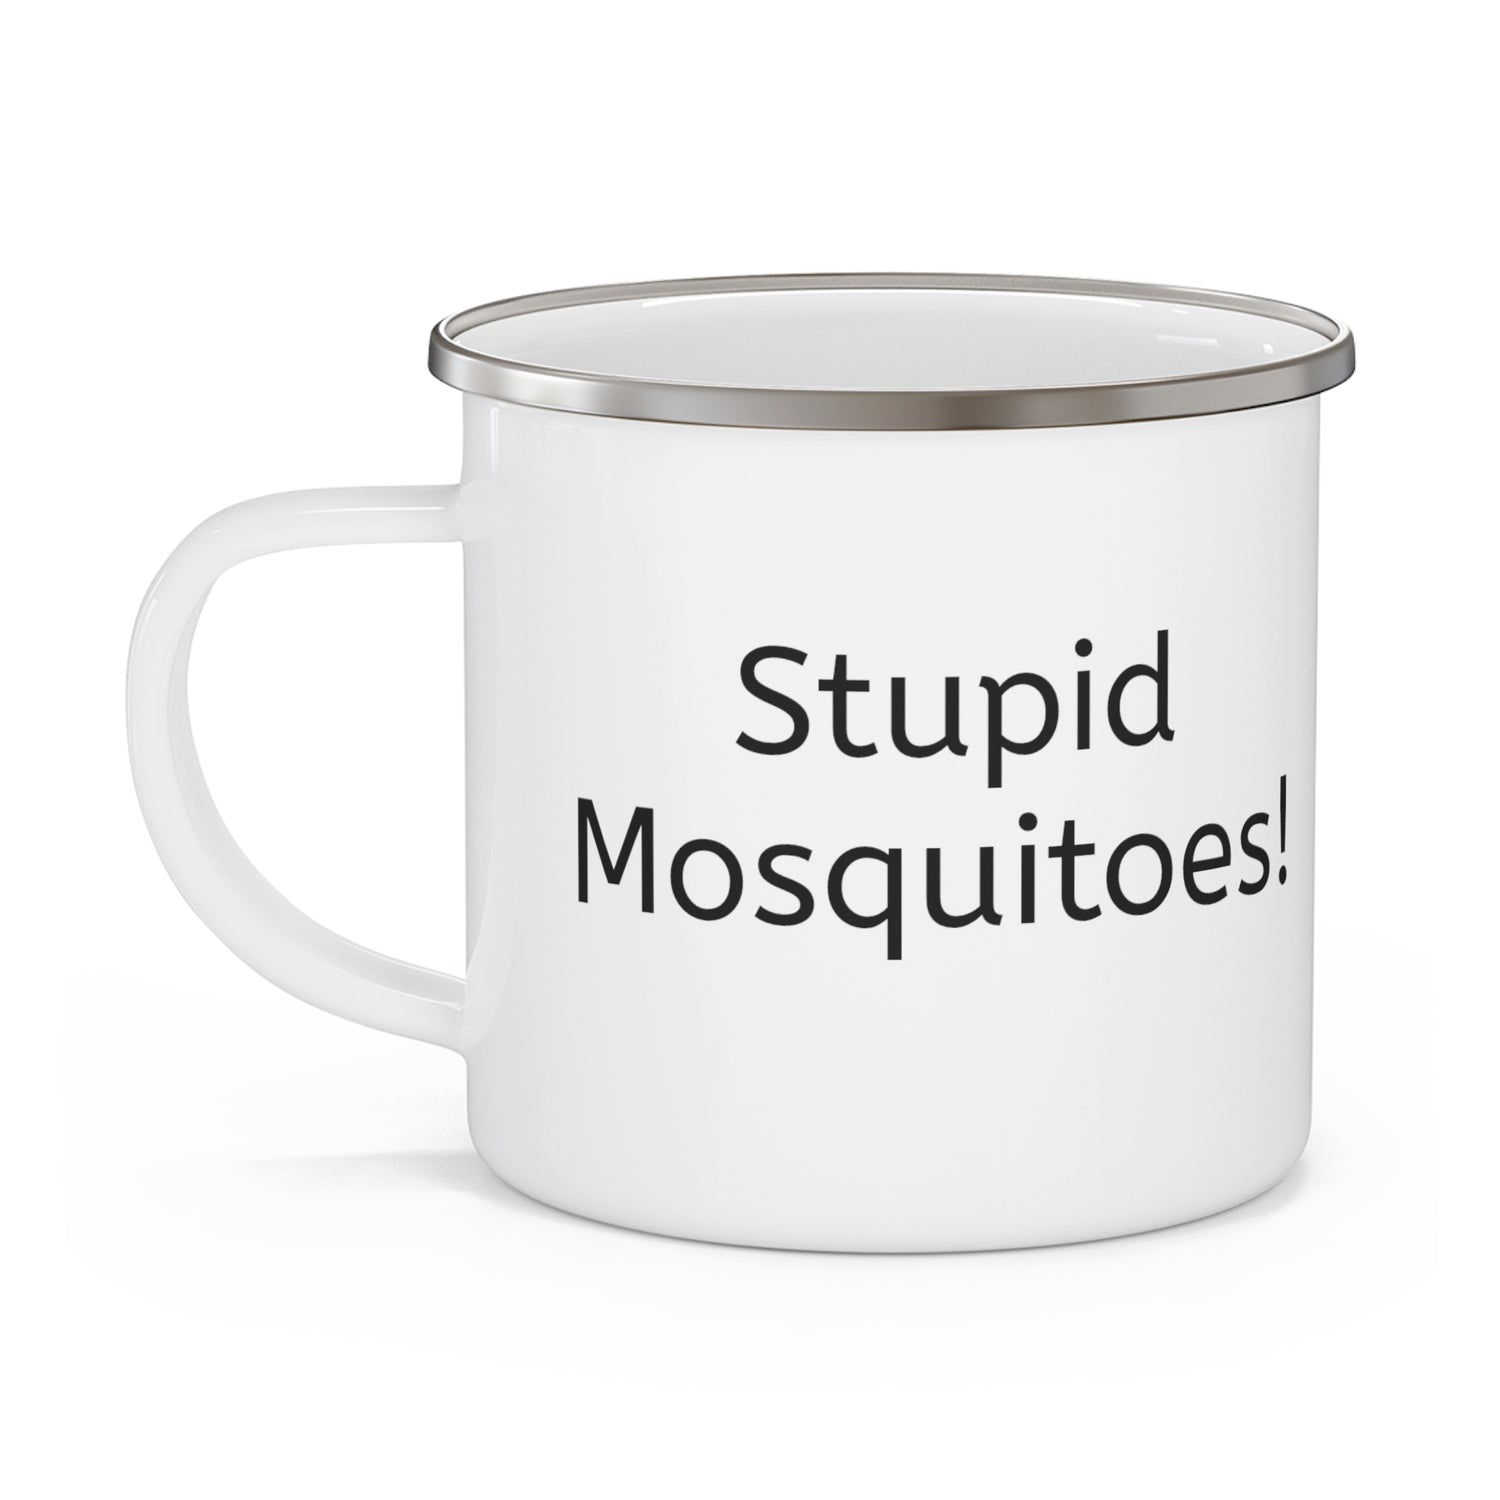 Stupid Mosquitoes Enamel Camping Mug - KNACK